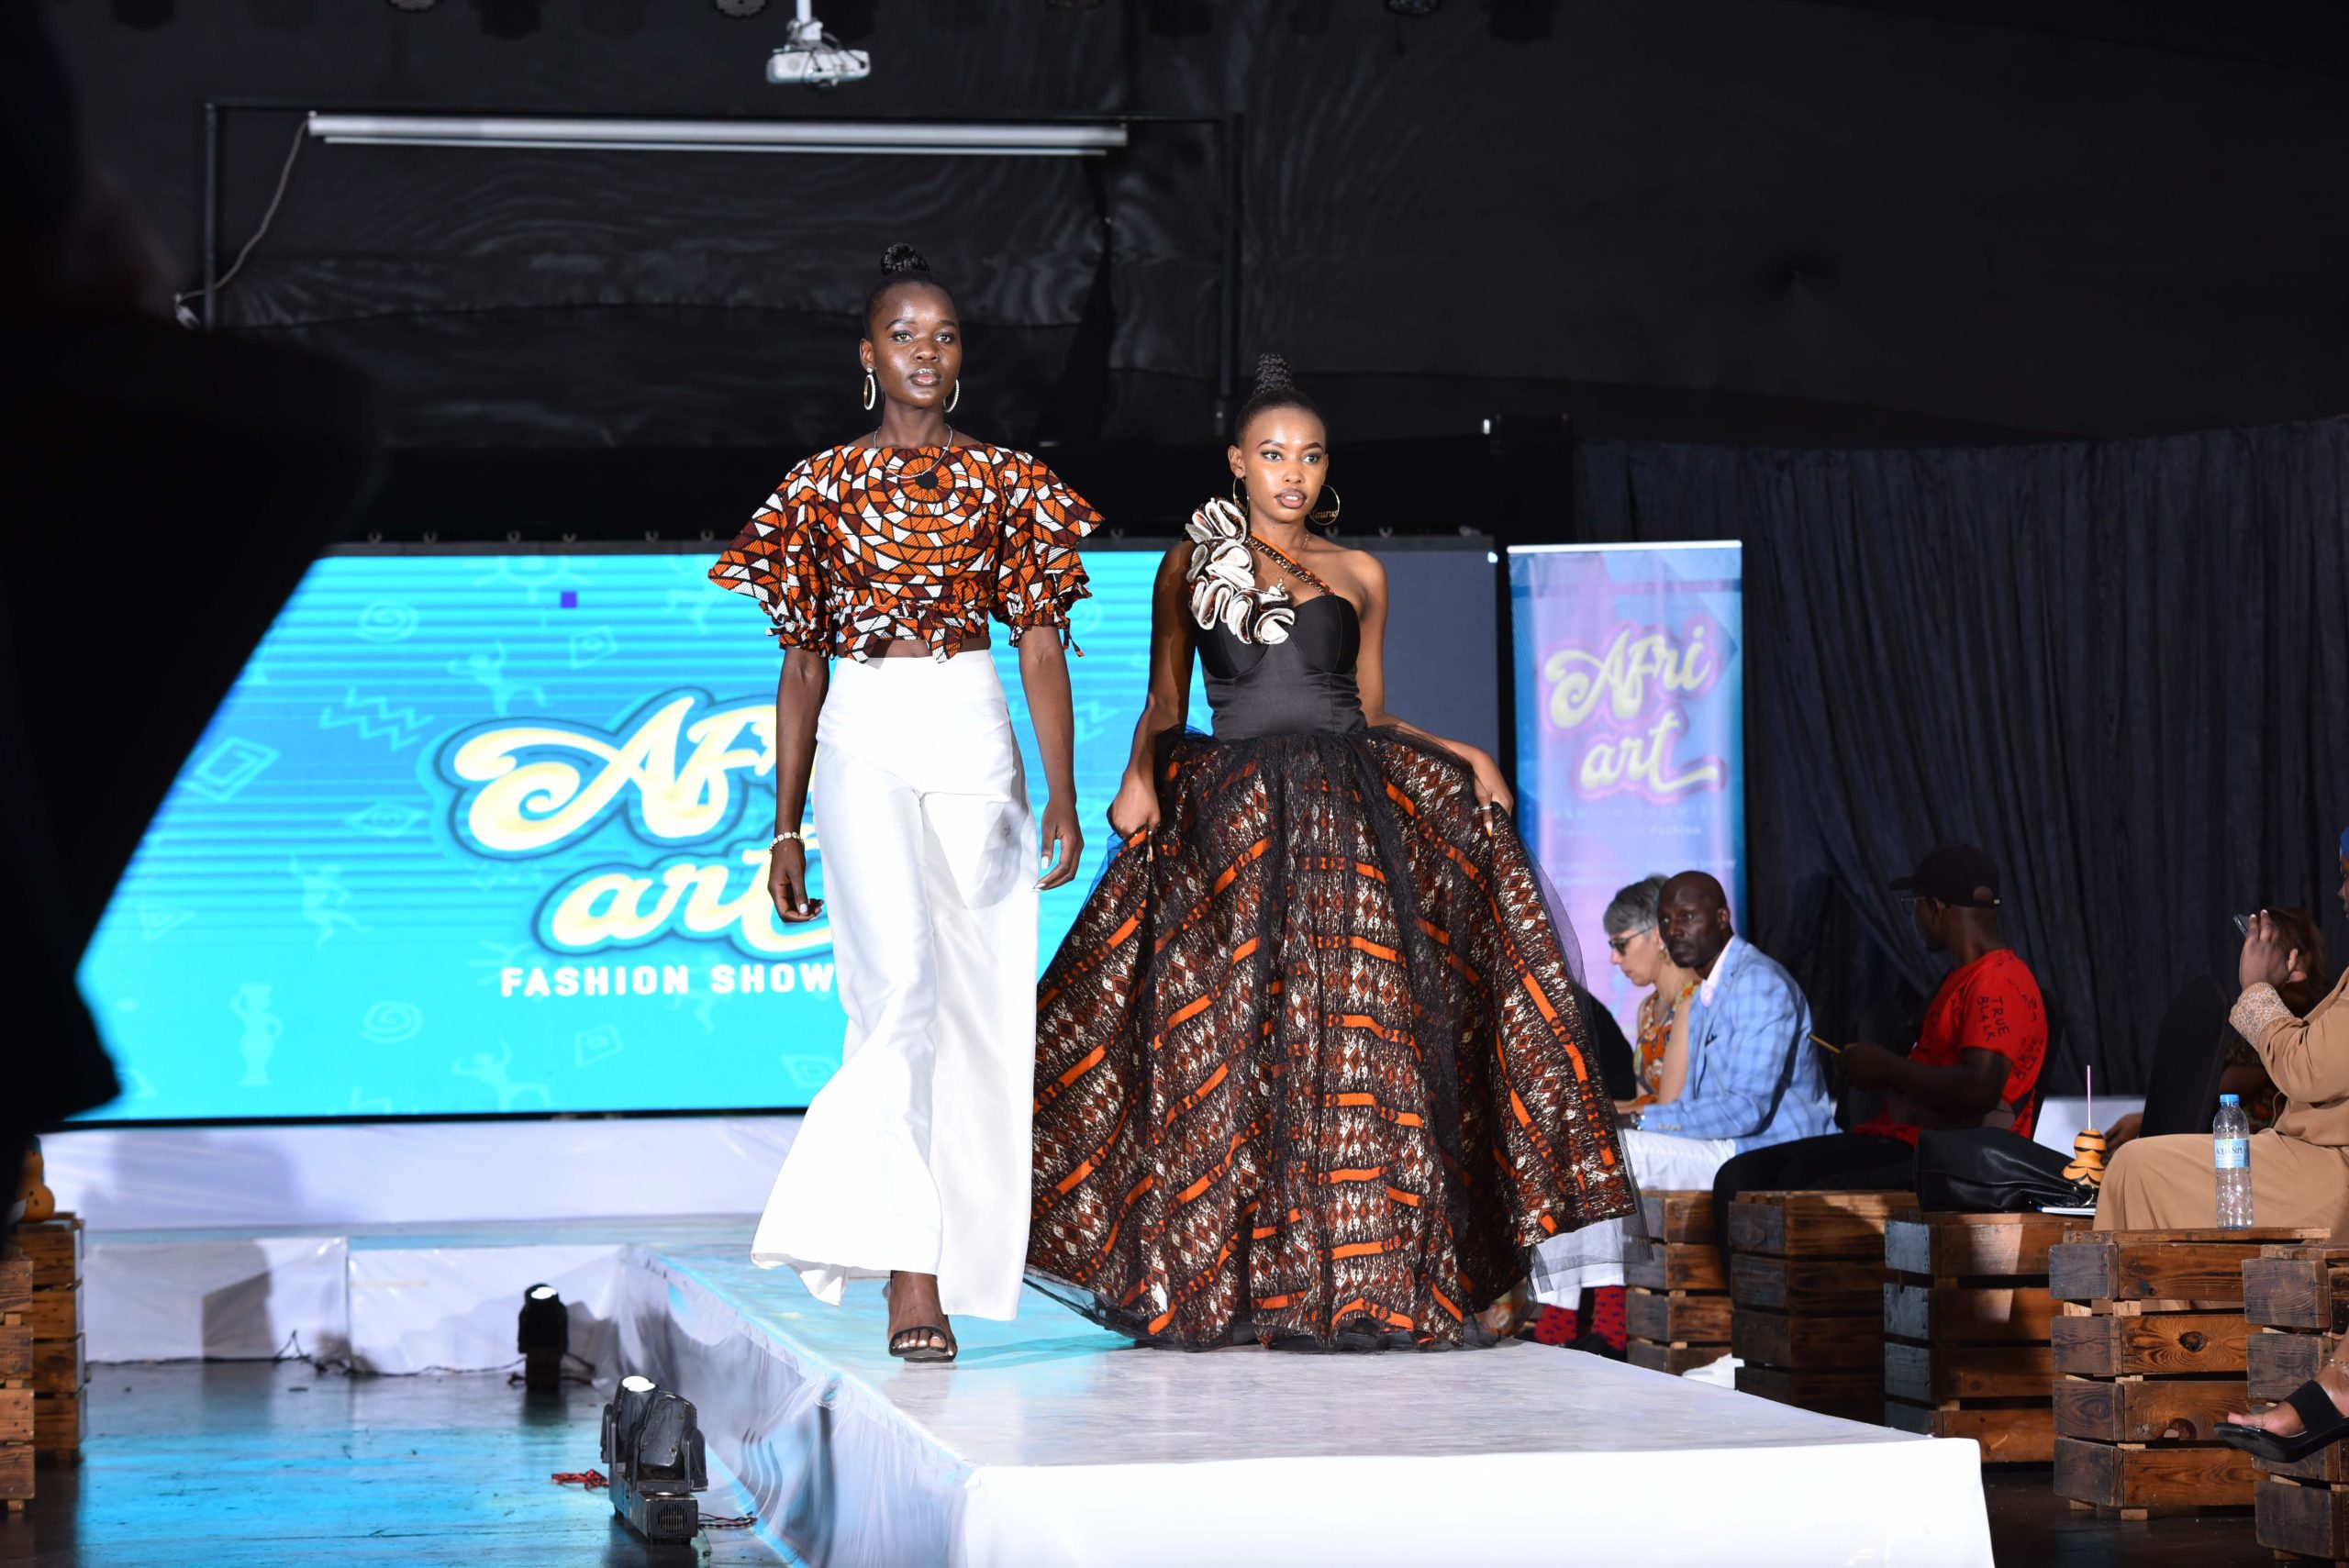 Afri Art fashion show